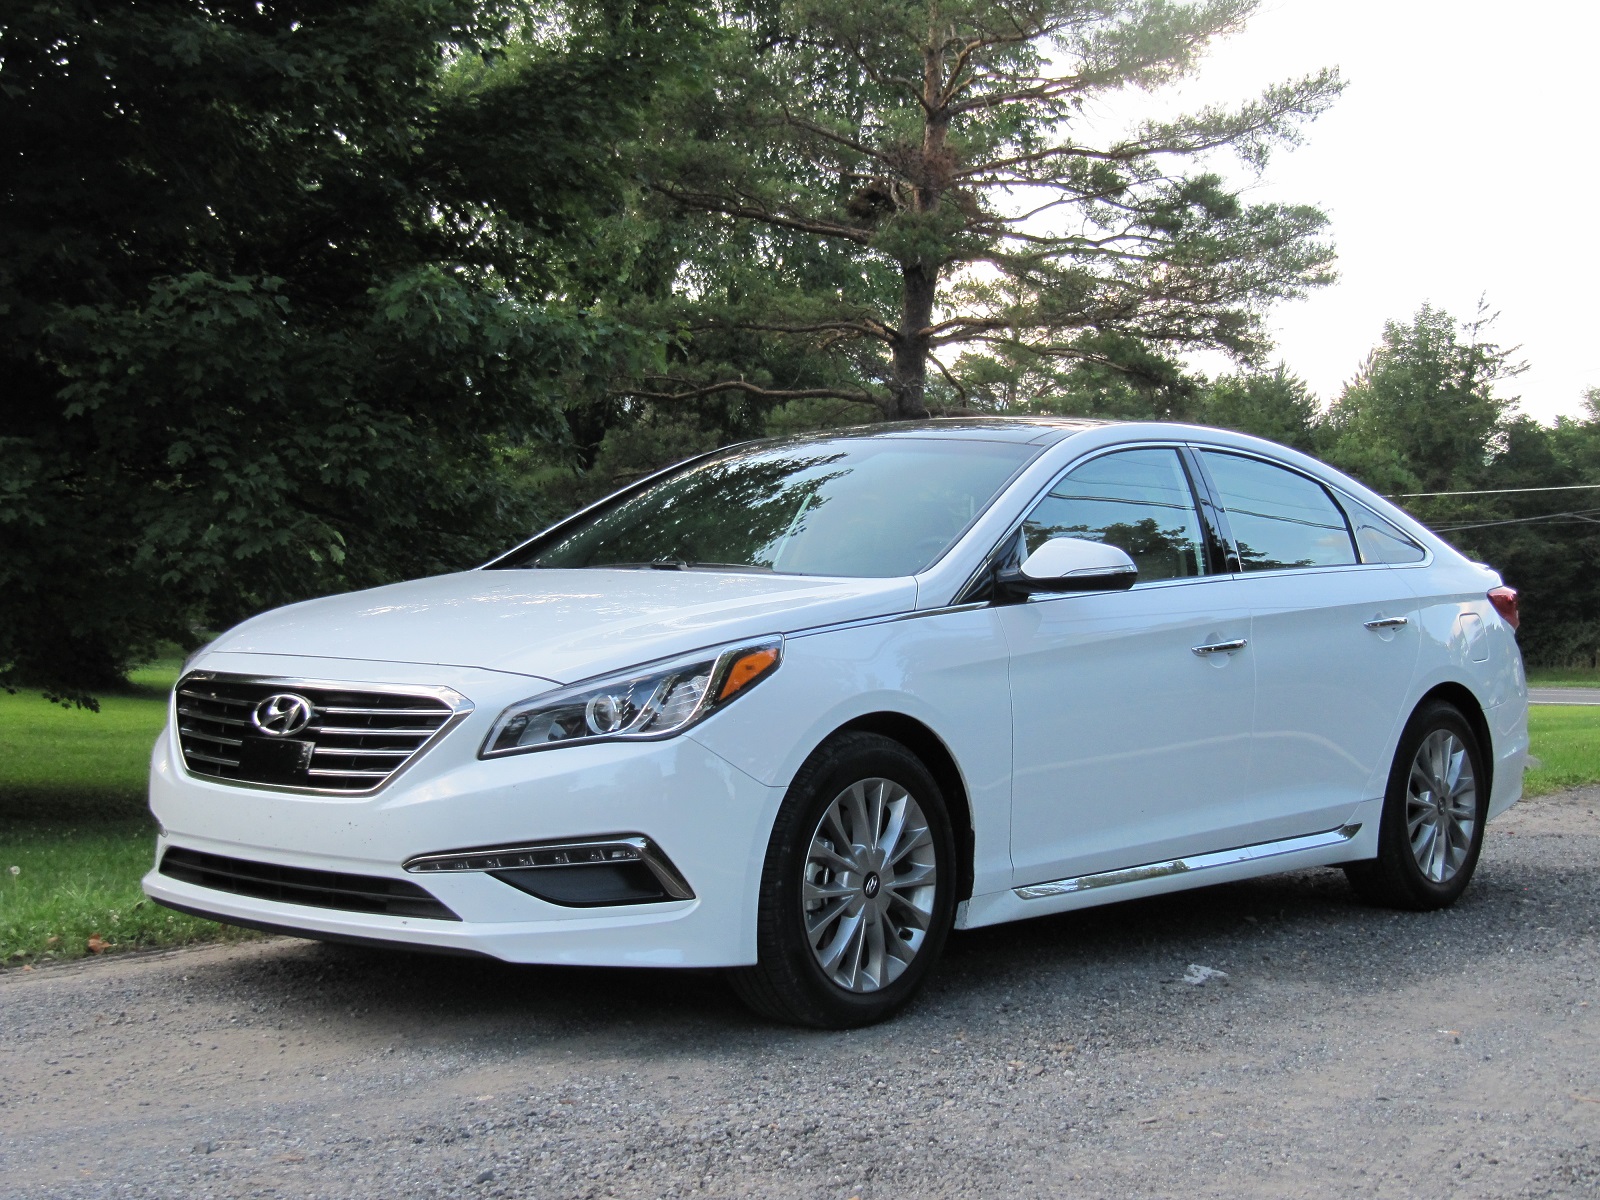 2015 Hyundai Sonata: Gas Mileage Review Of New Mid-Size Sedan